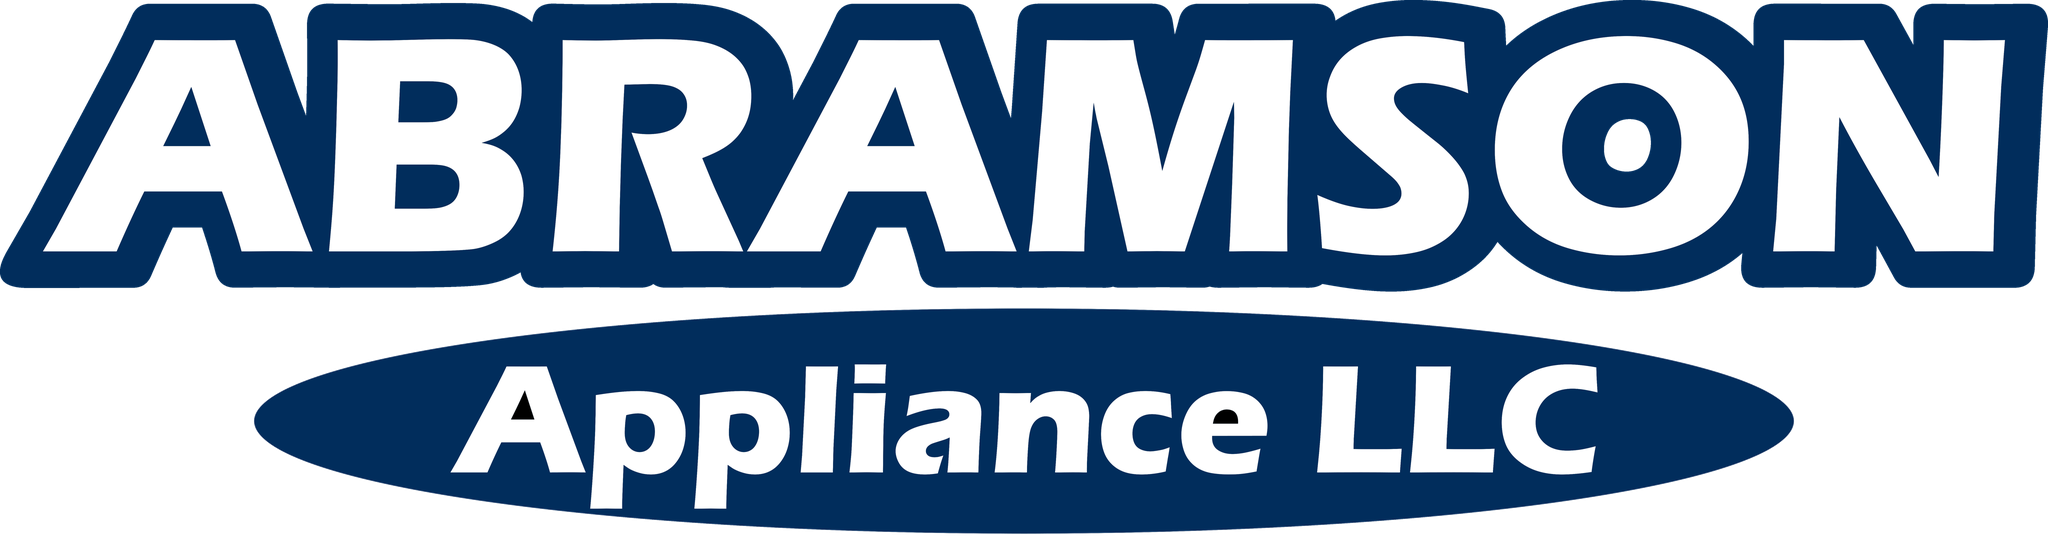 Abramson Appliance LLC